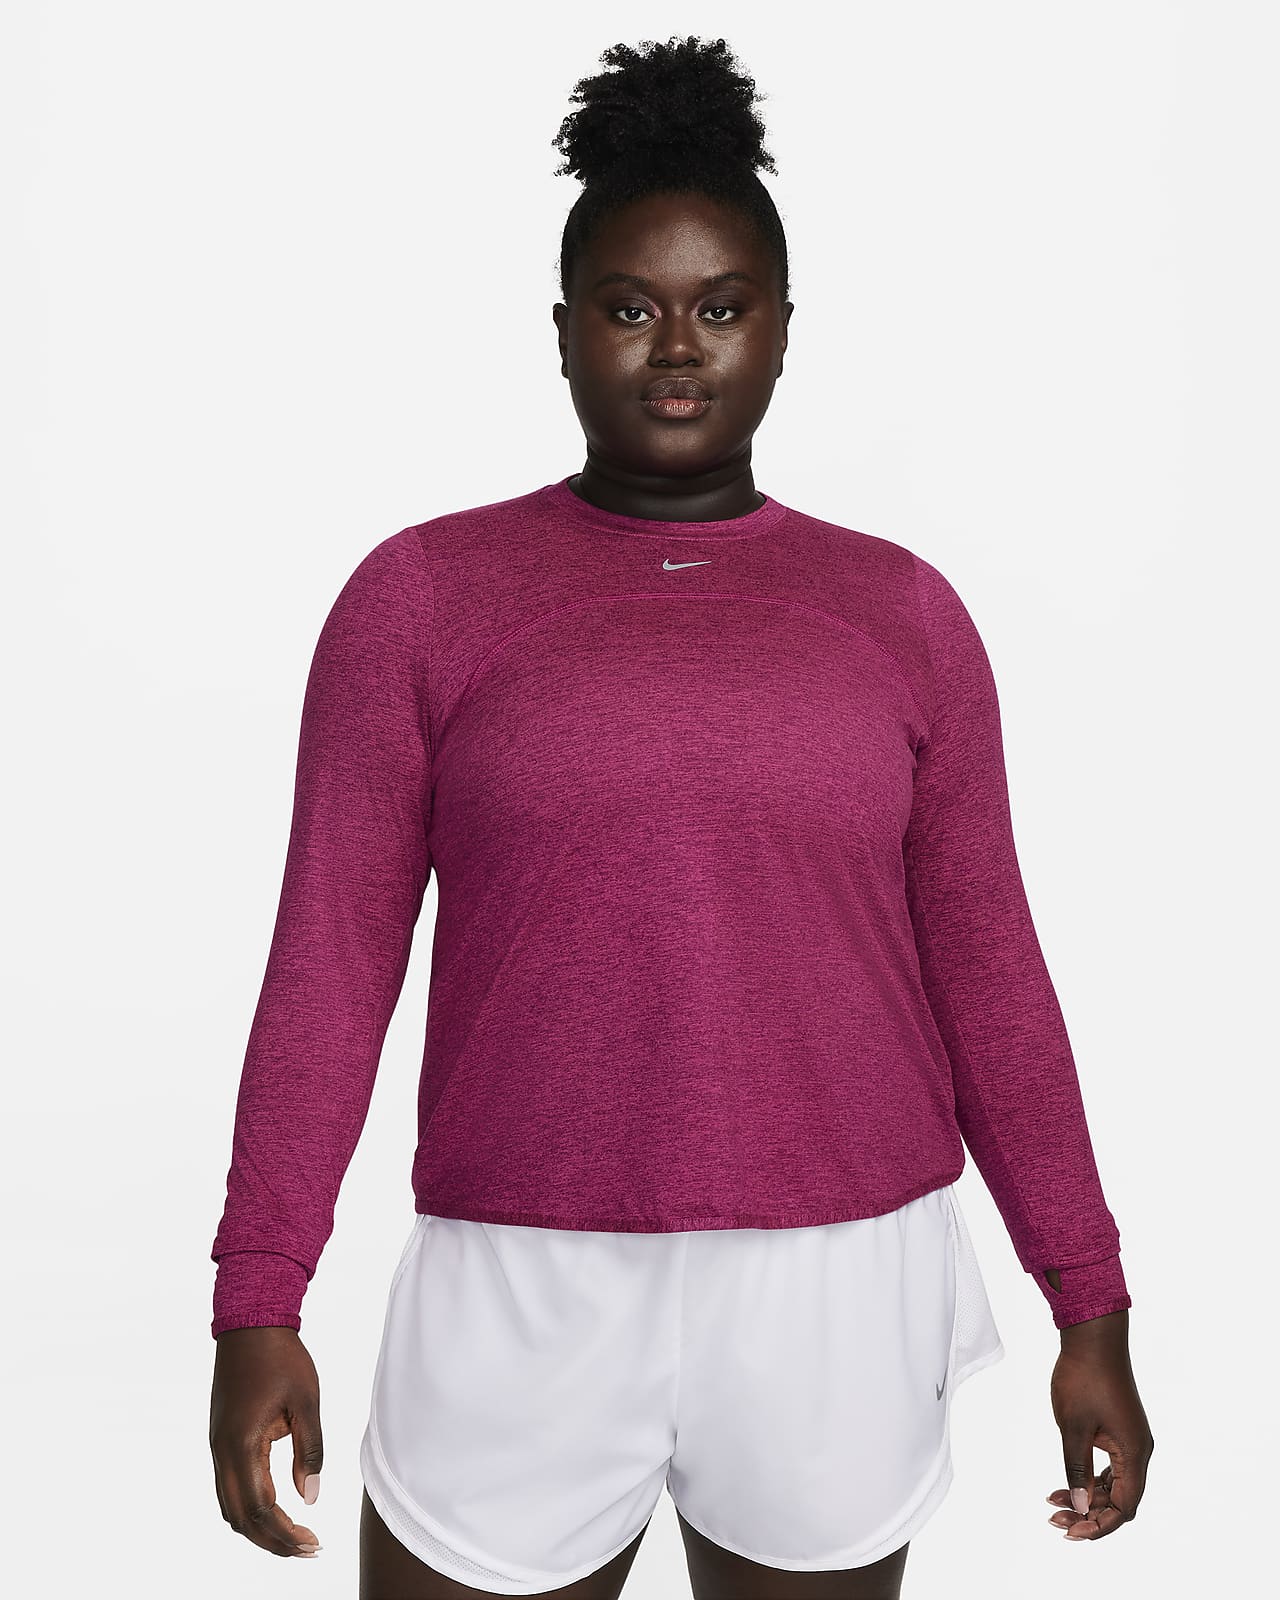 Nike Women's Dri-Fit Swift Element UV Crew-Neck Running Top, Fireberry, Size: 2x